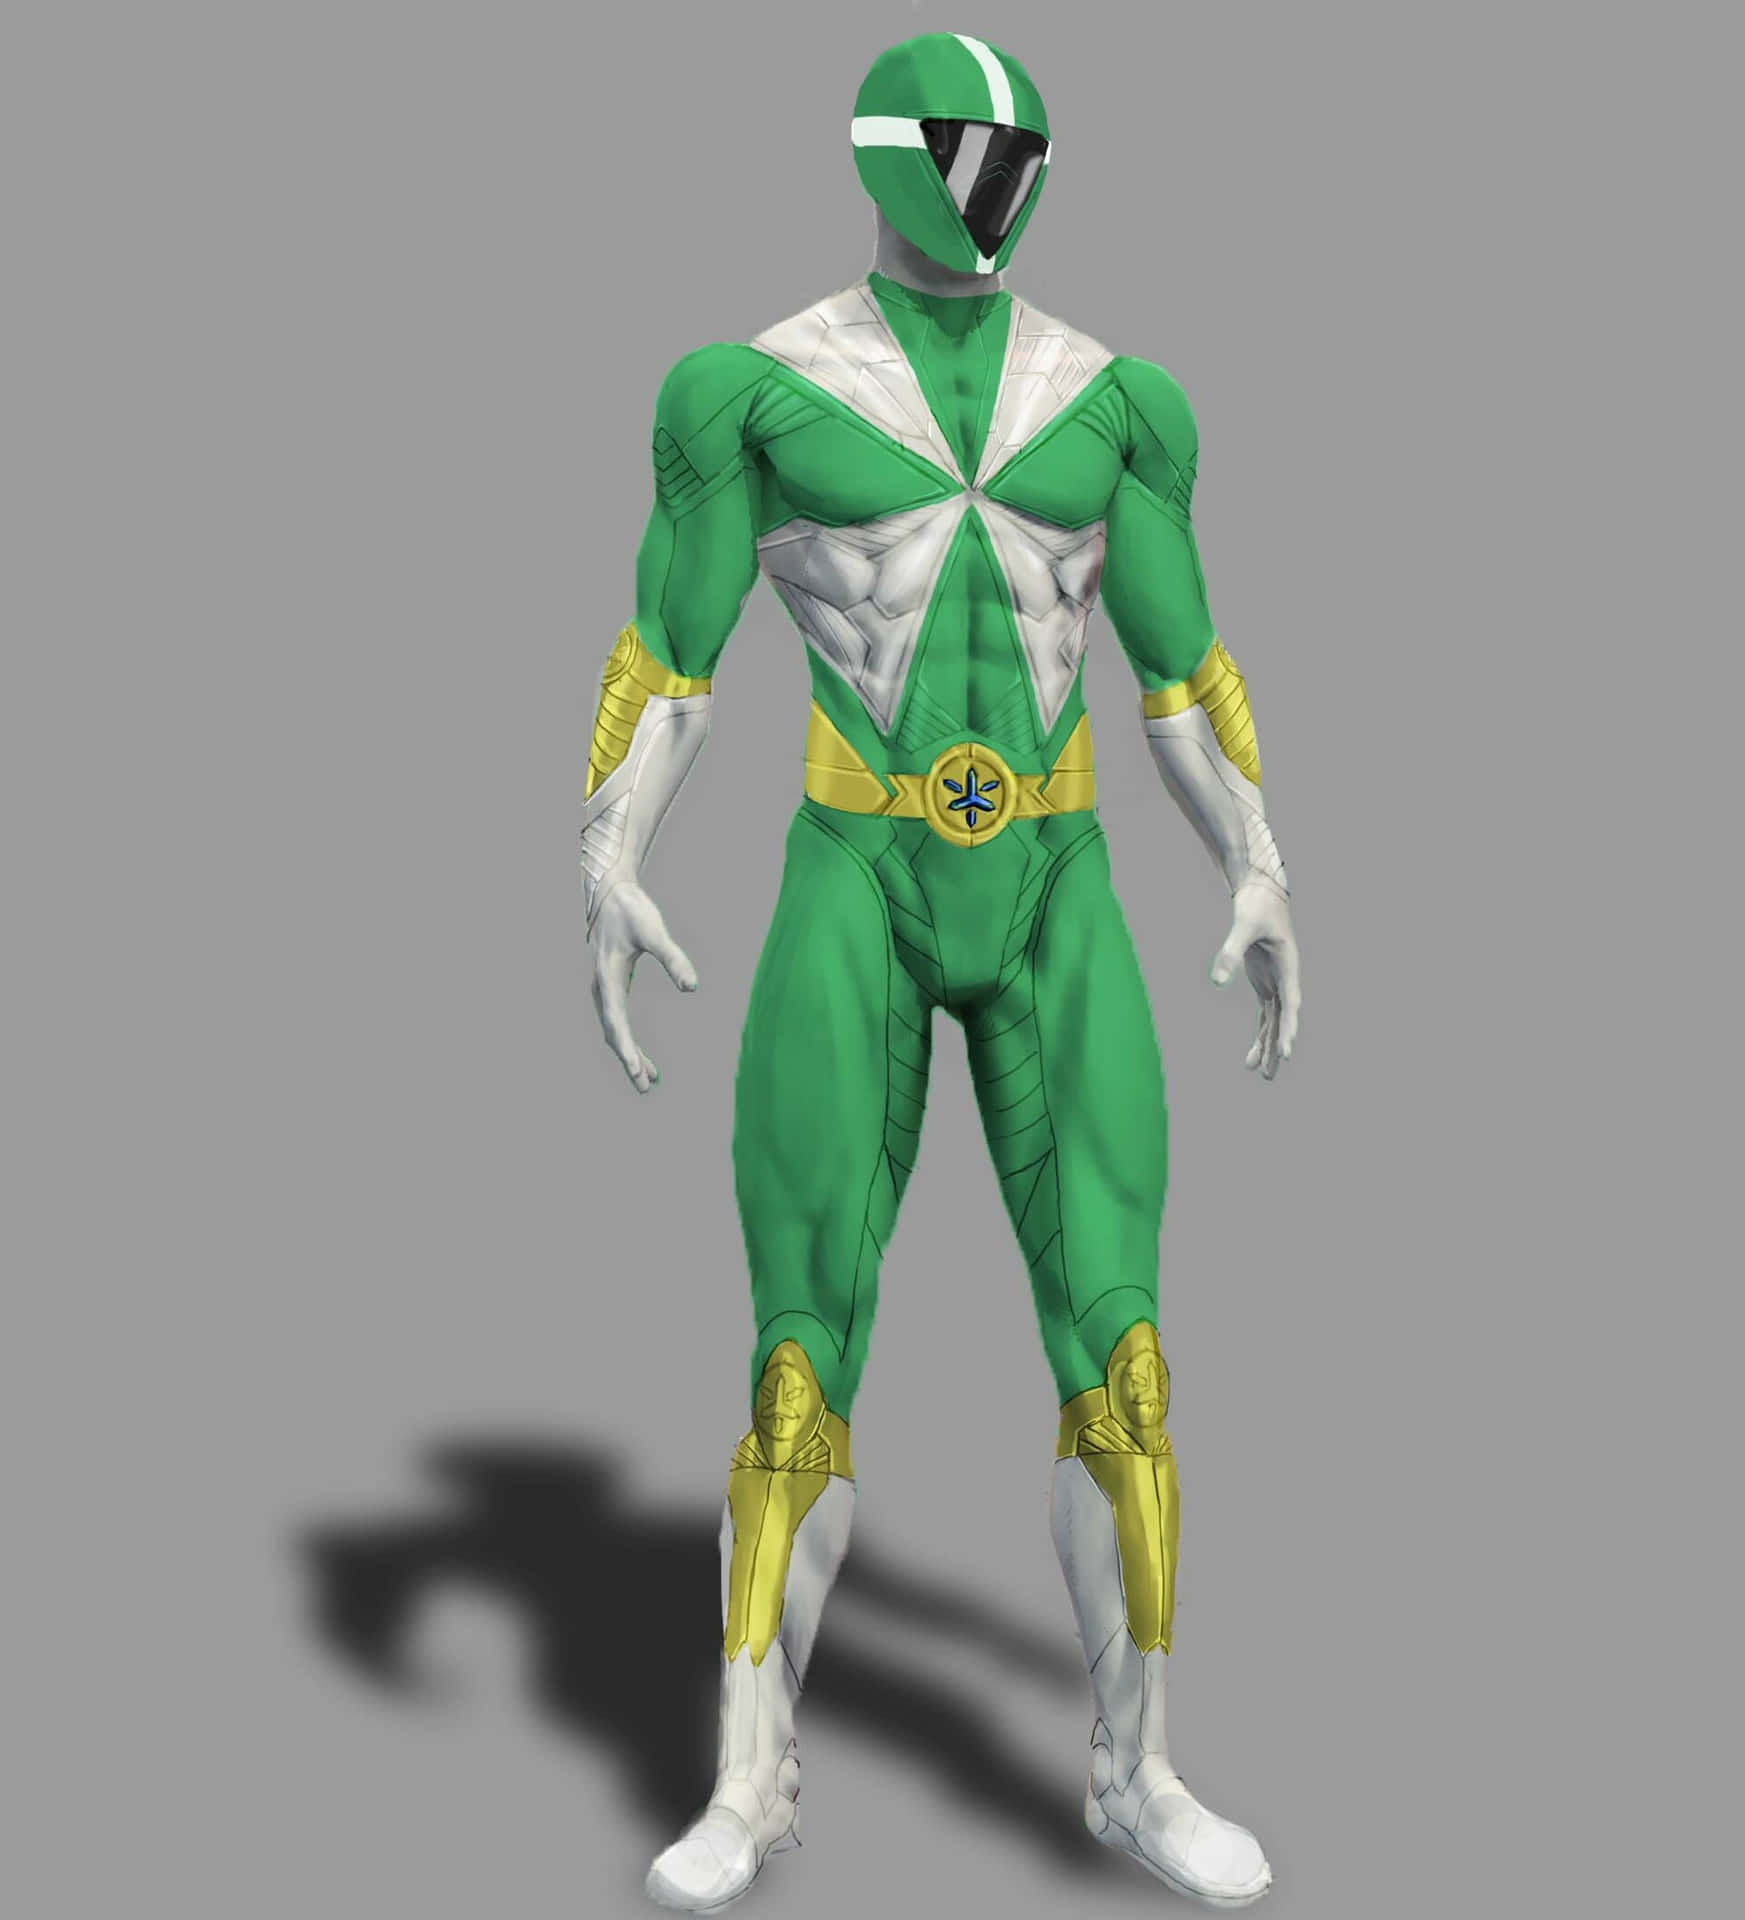 Green Ranger Power Suit Wallpaper